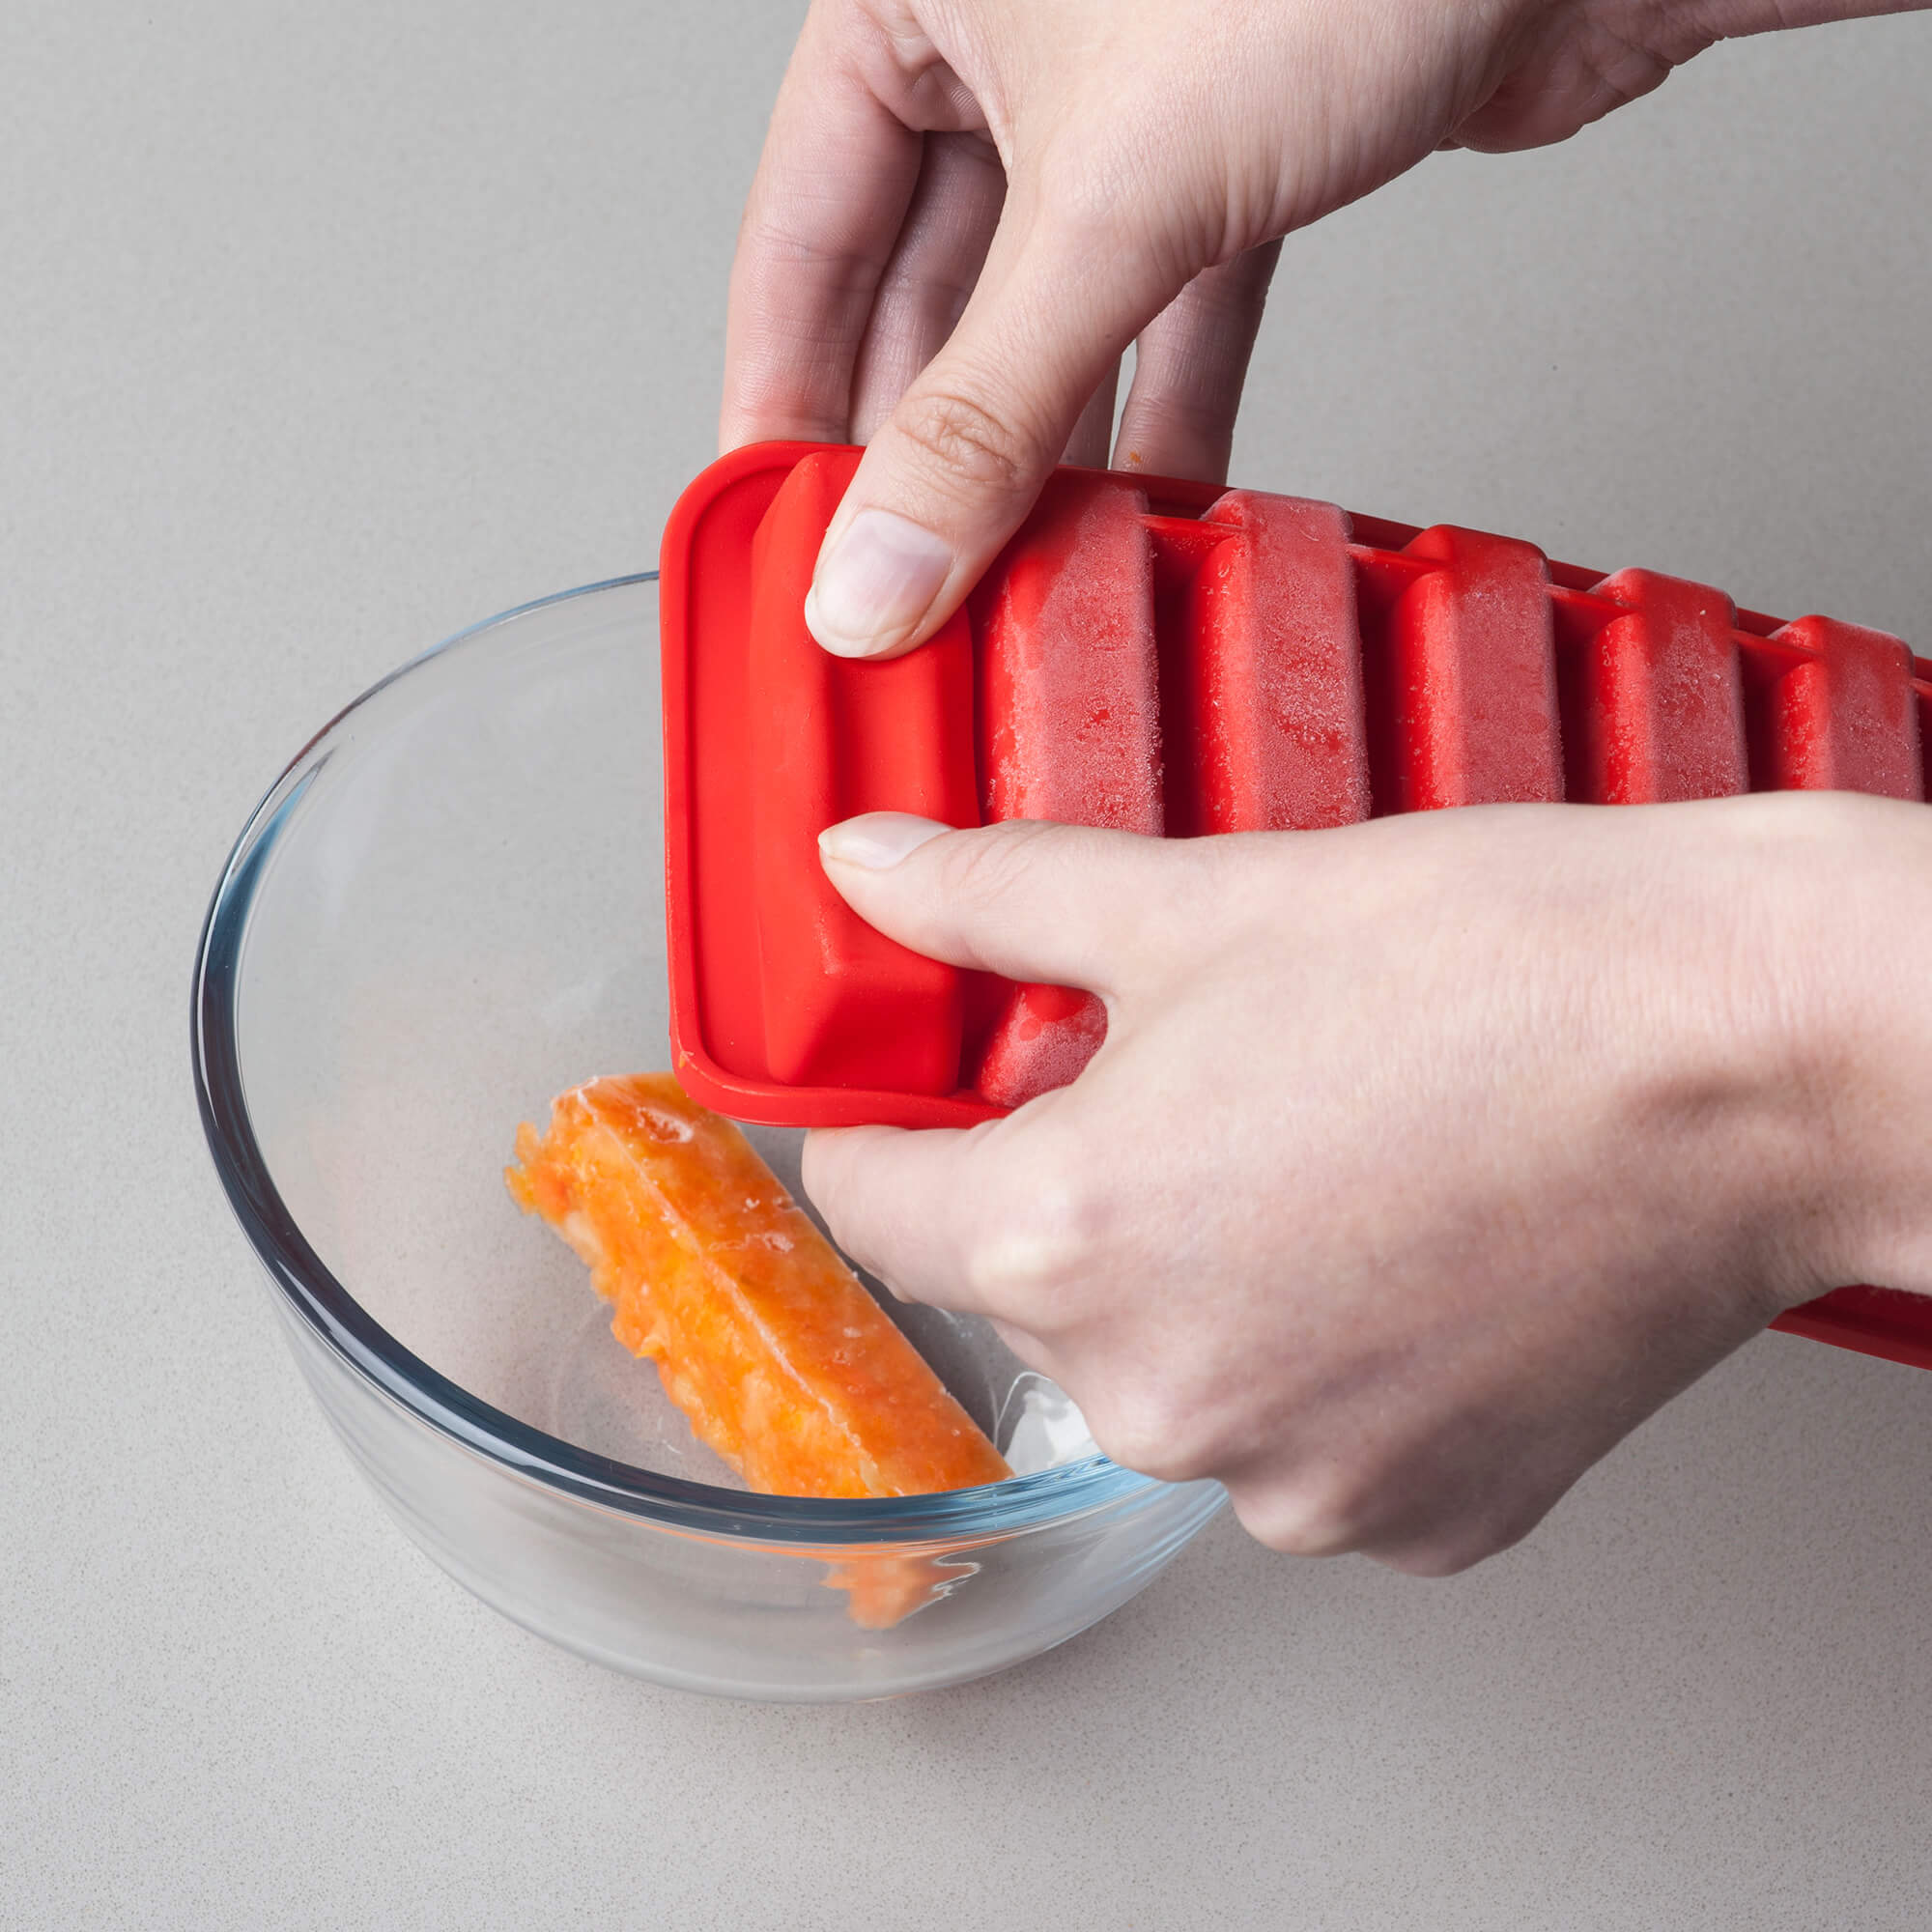 NUK Homemade Baby Food Flexible Freezer Tray and Lid Set –